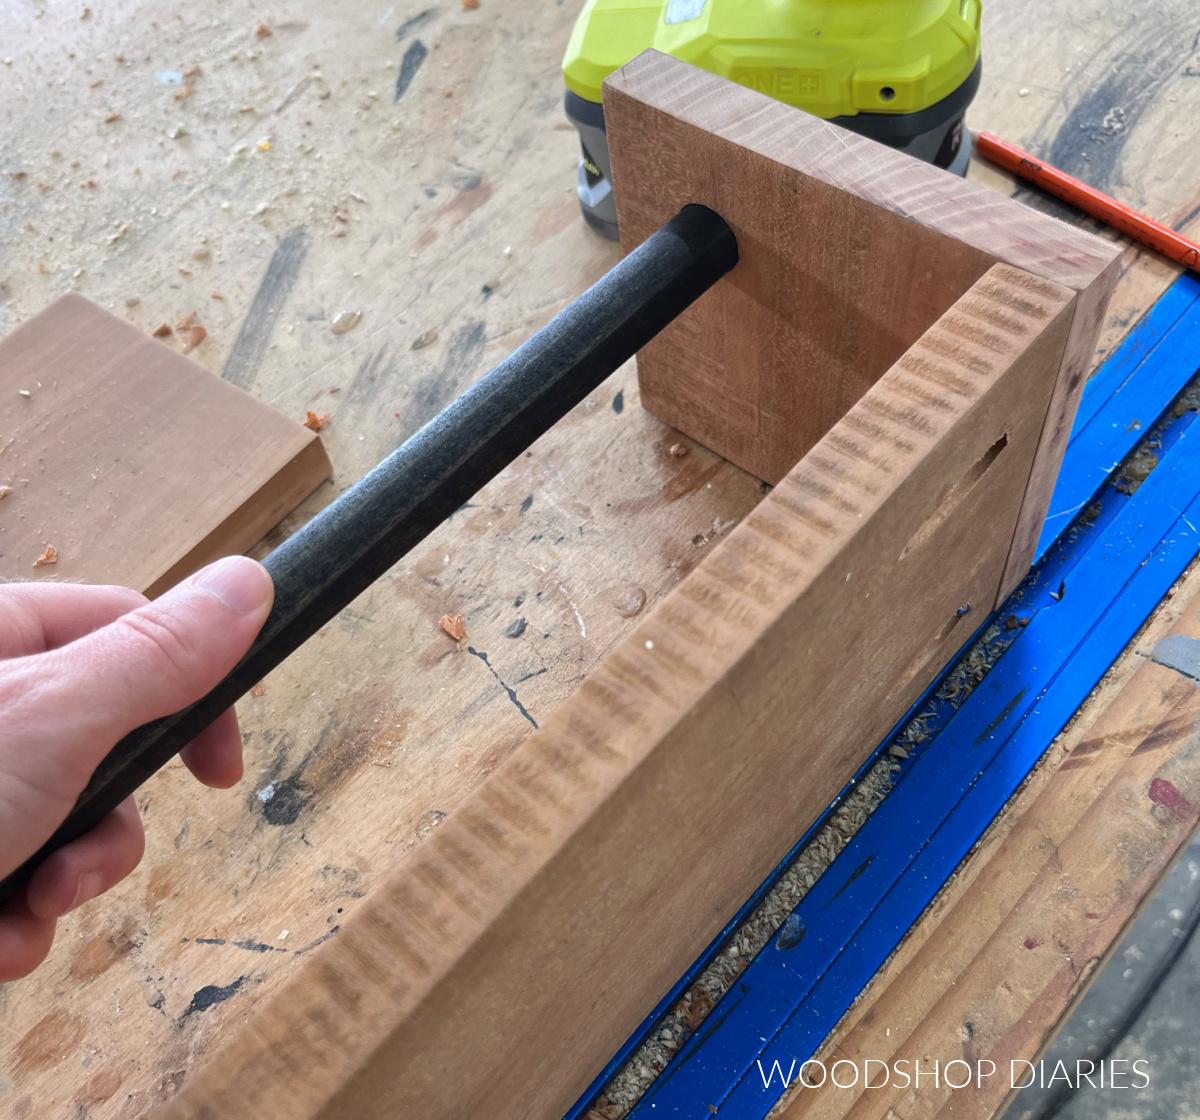 Inserting dowel rod into hole on sides of shelf